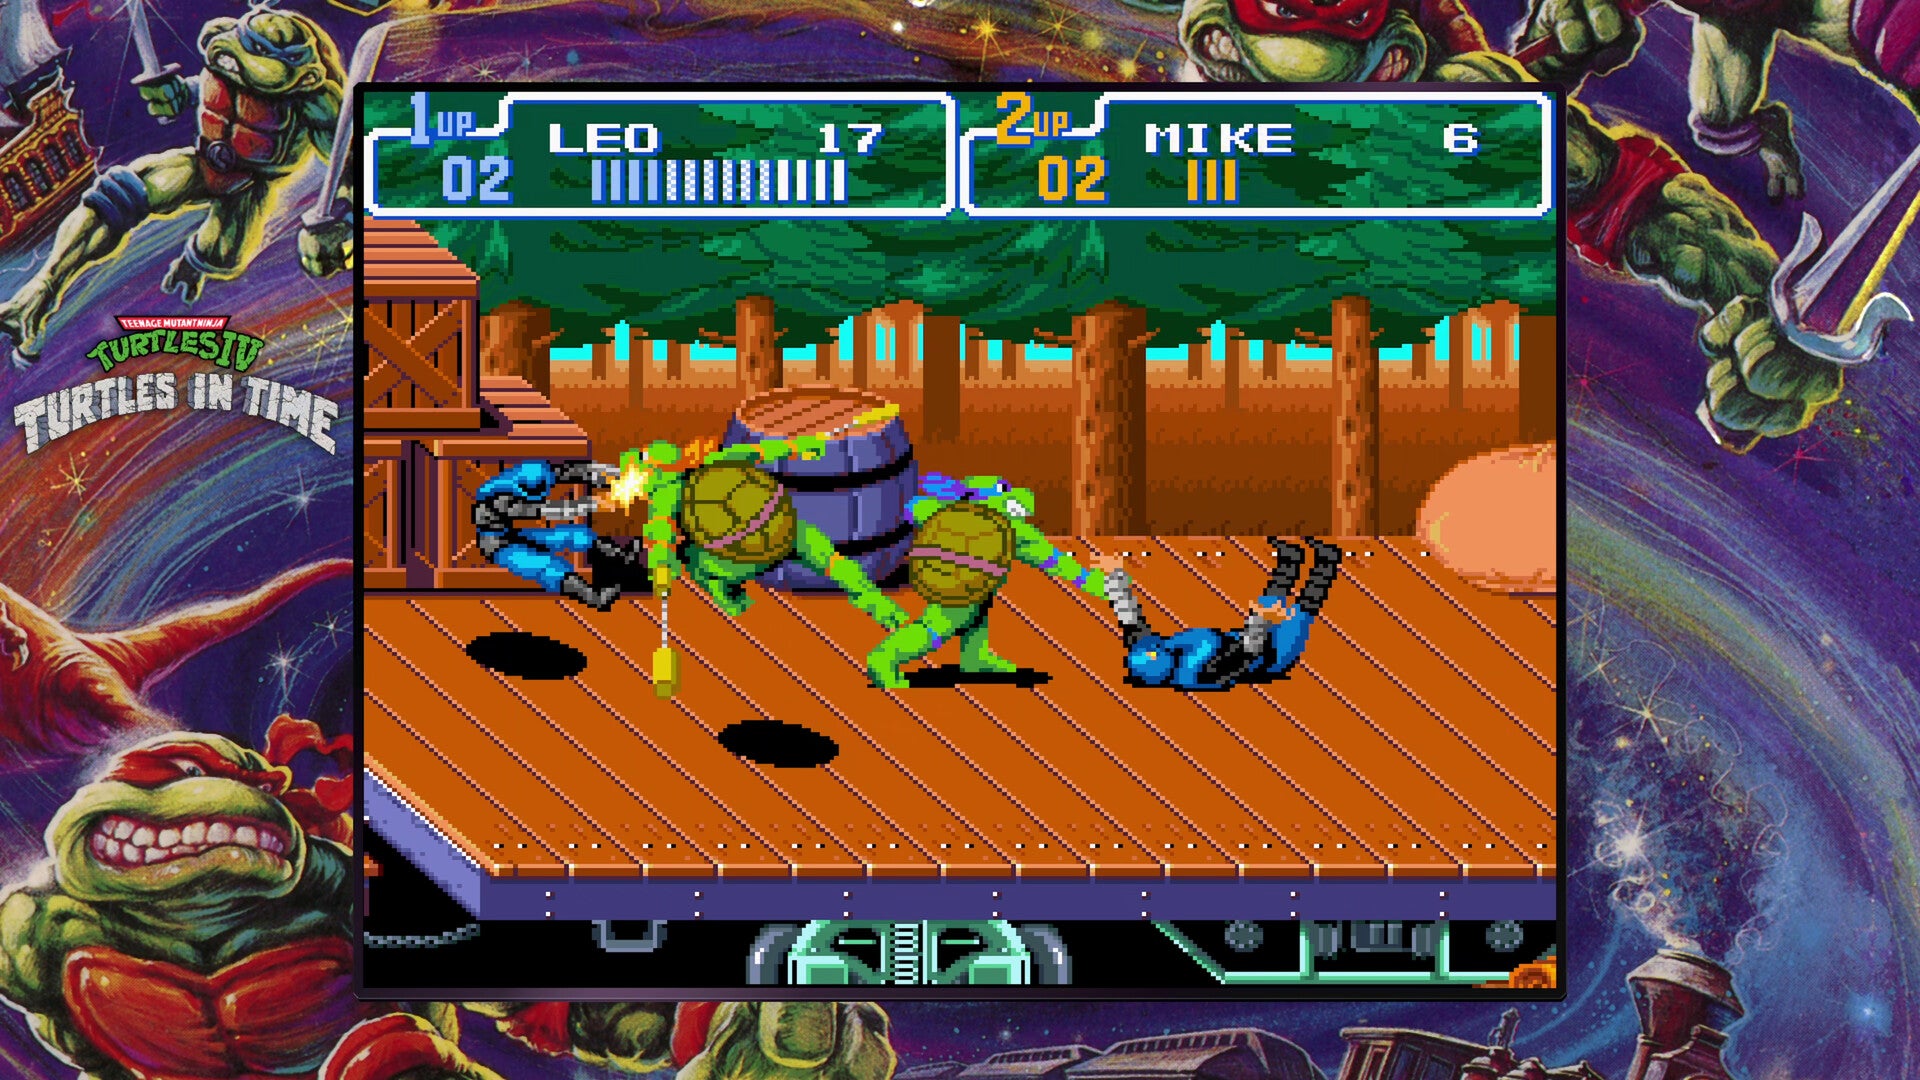 Cowabunga!  SNES klasik TMNT 4: Turtles in Time mendapatkan multiplayer online